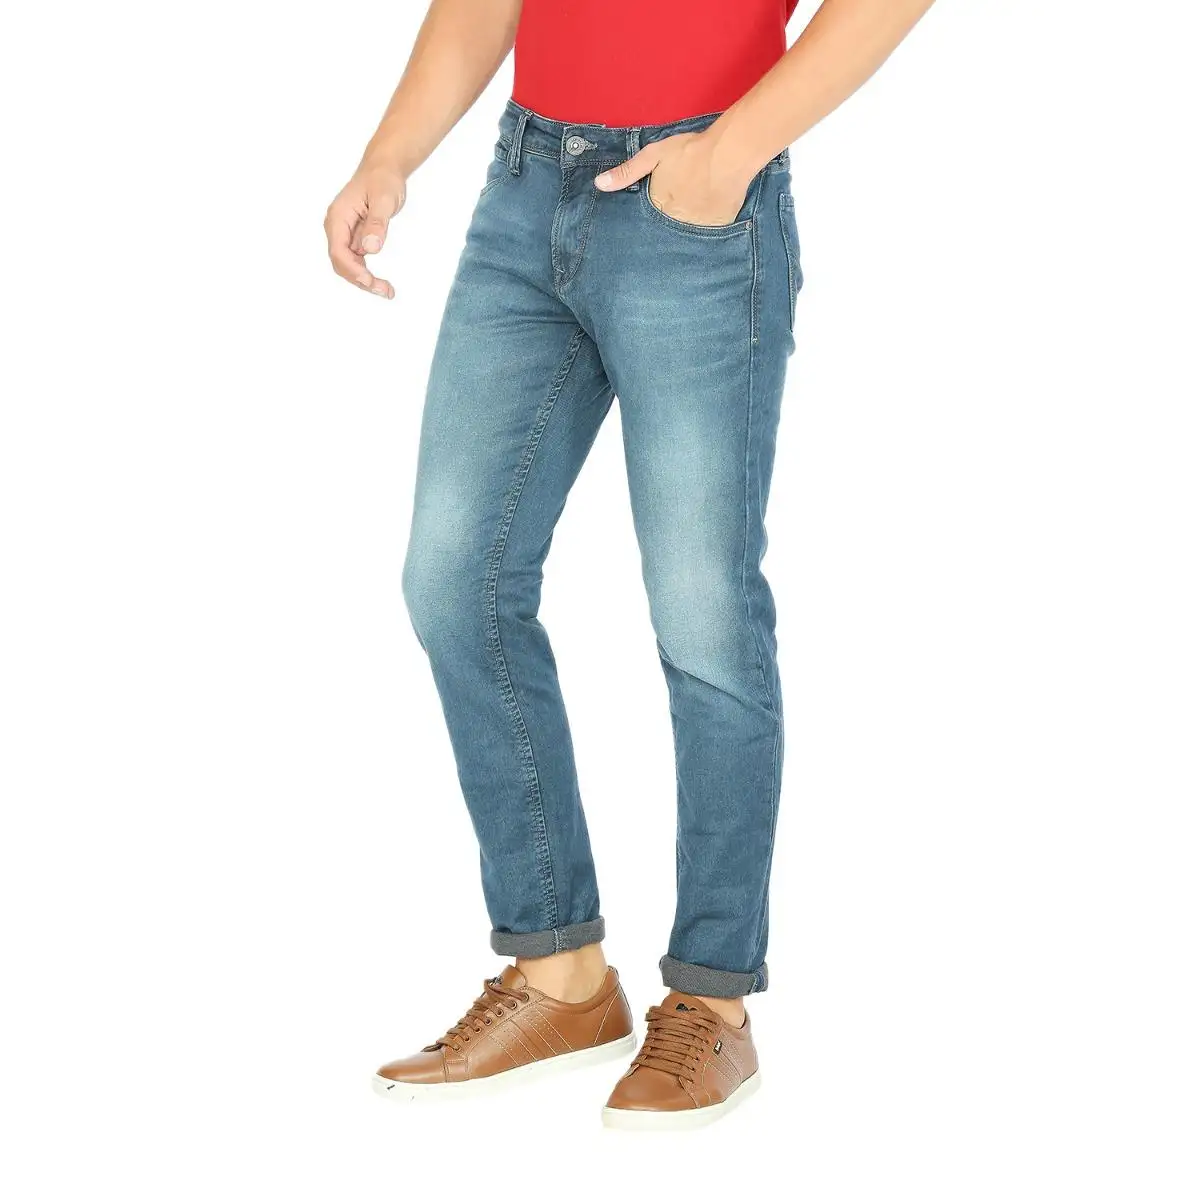 Denim Jeans Lawman Pg3 Vintage Blue Slim Fit Solid Jeans For Men's casual jeans for men with good affordable wholesale price